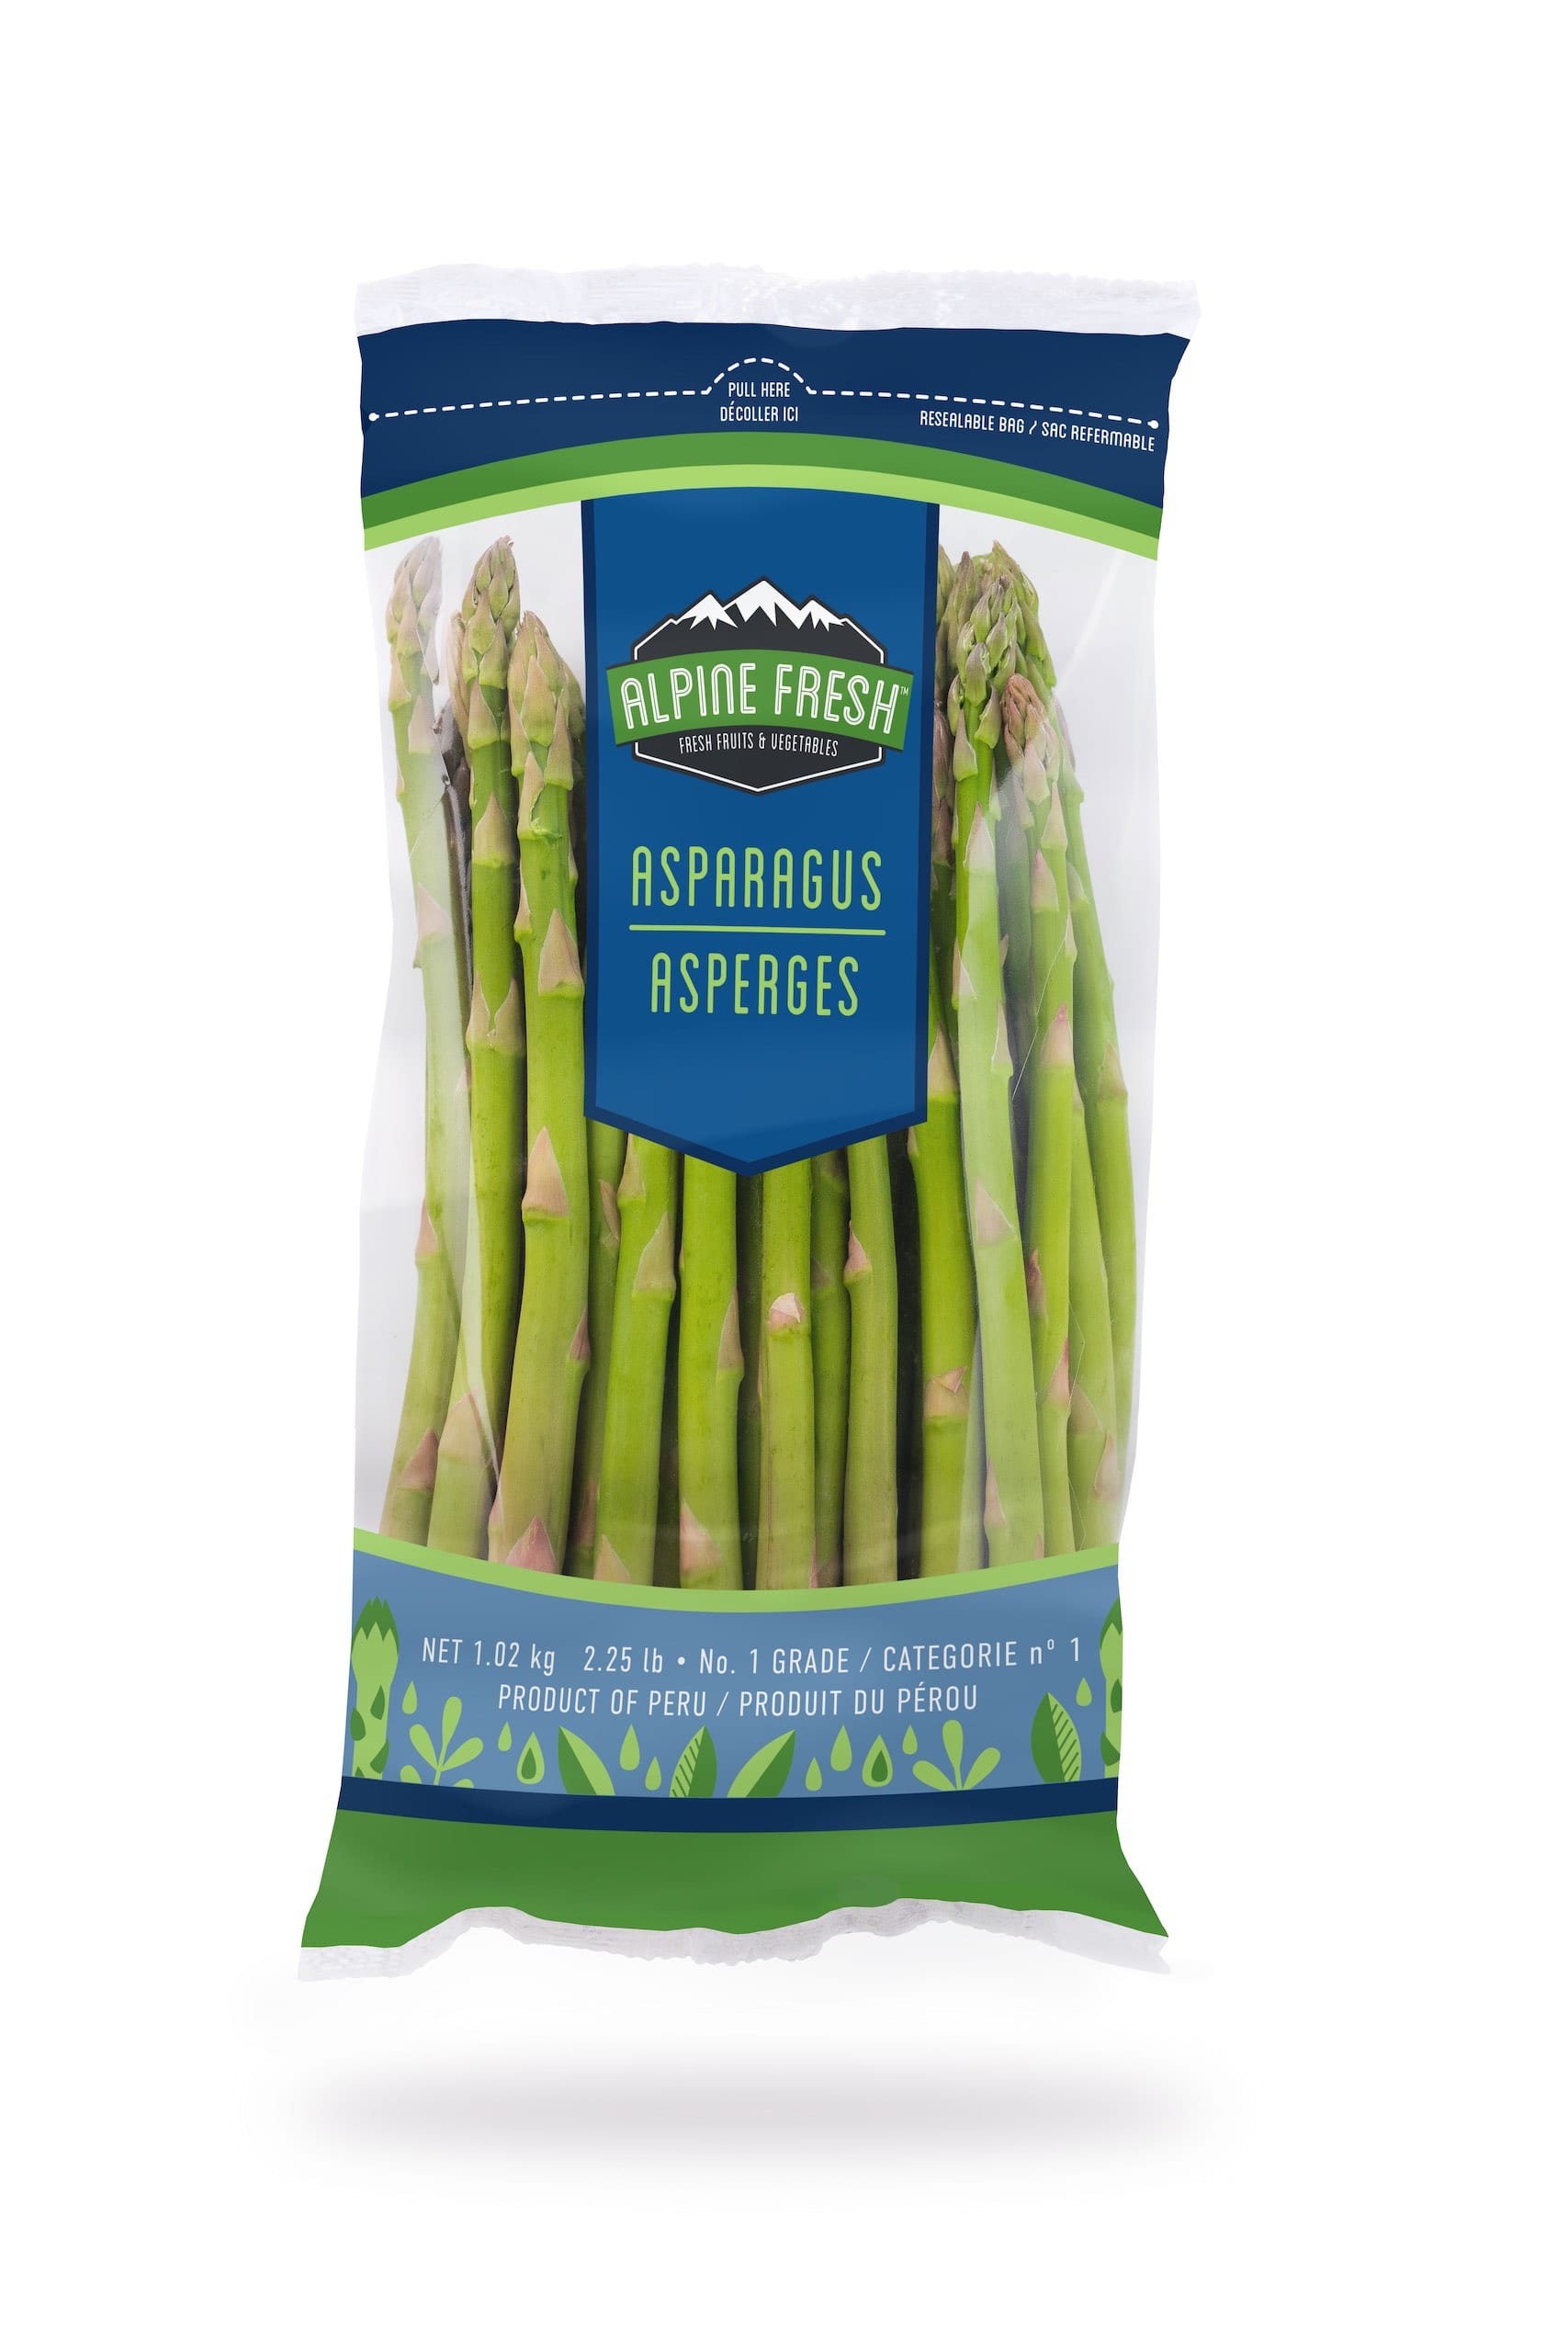 Bag of Alpine Fresh asparagus from Peru